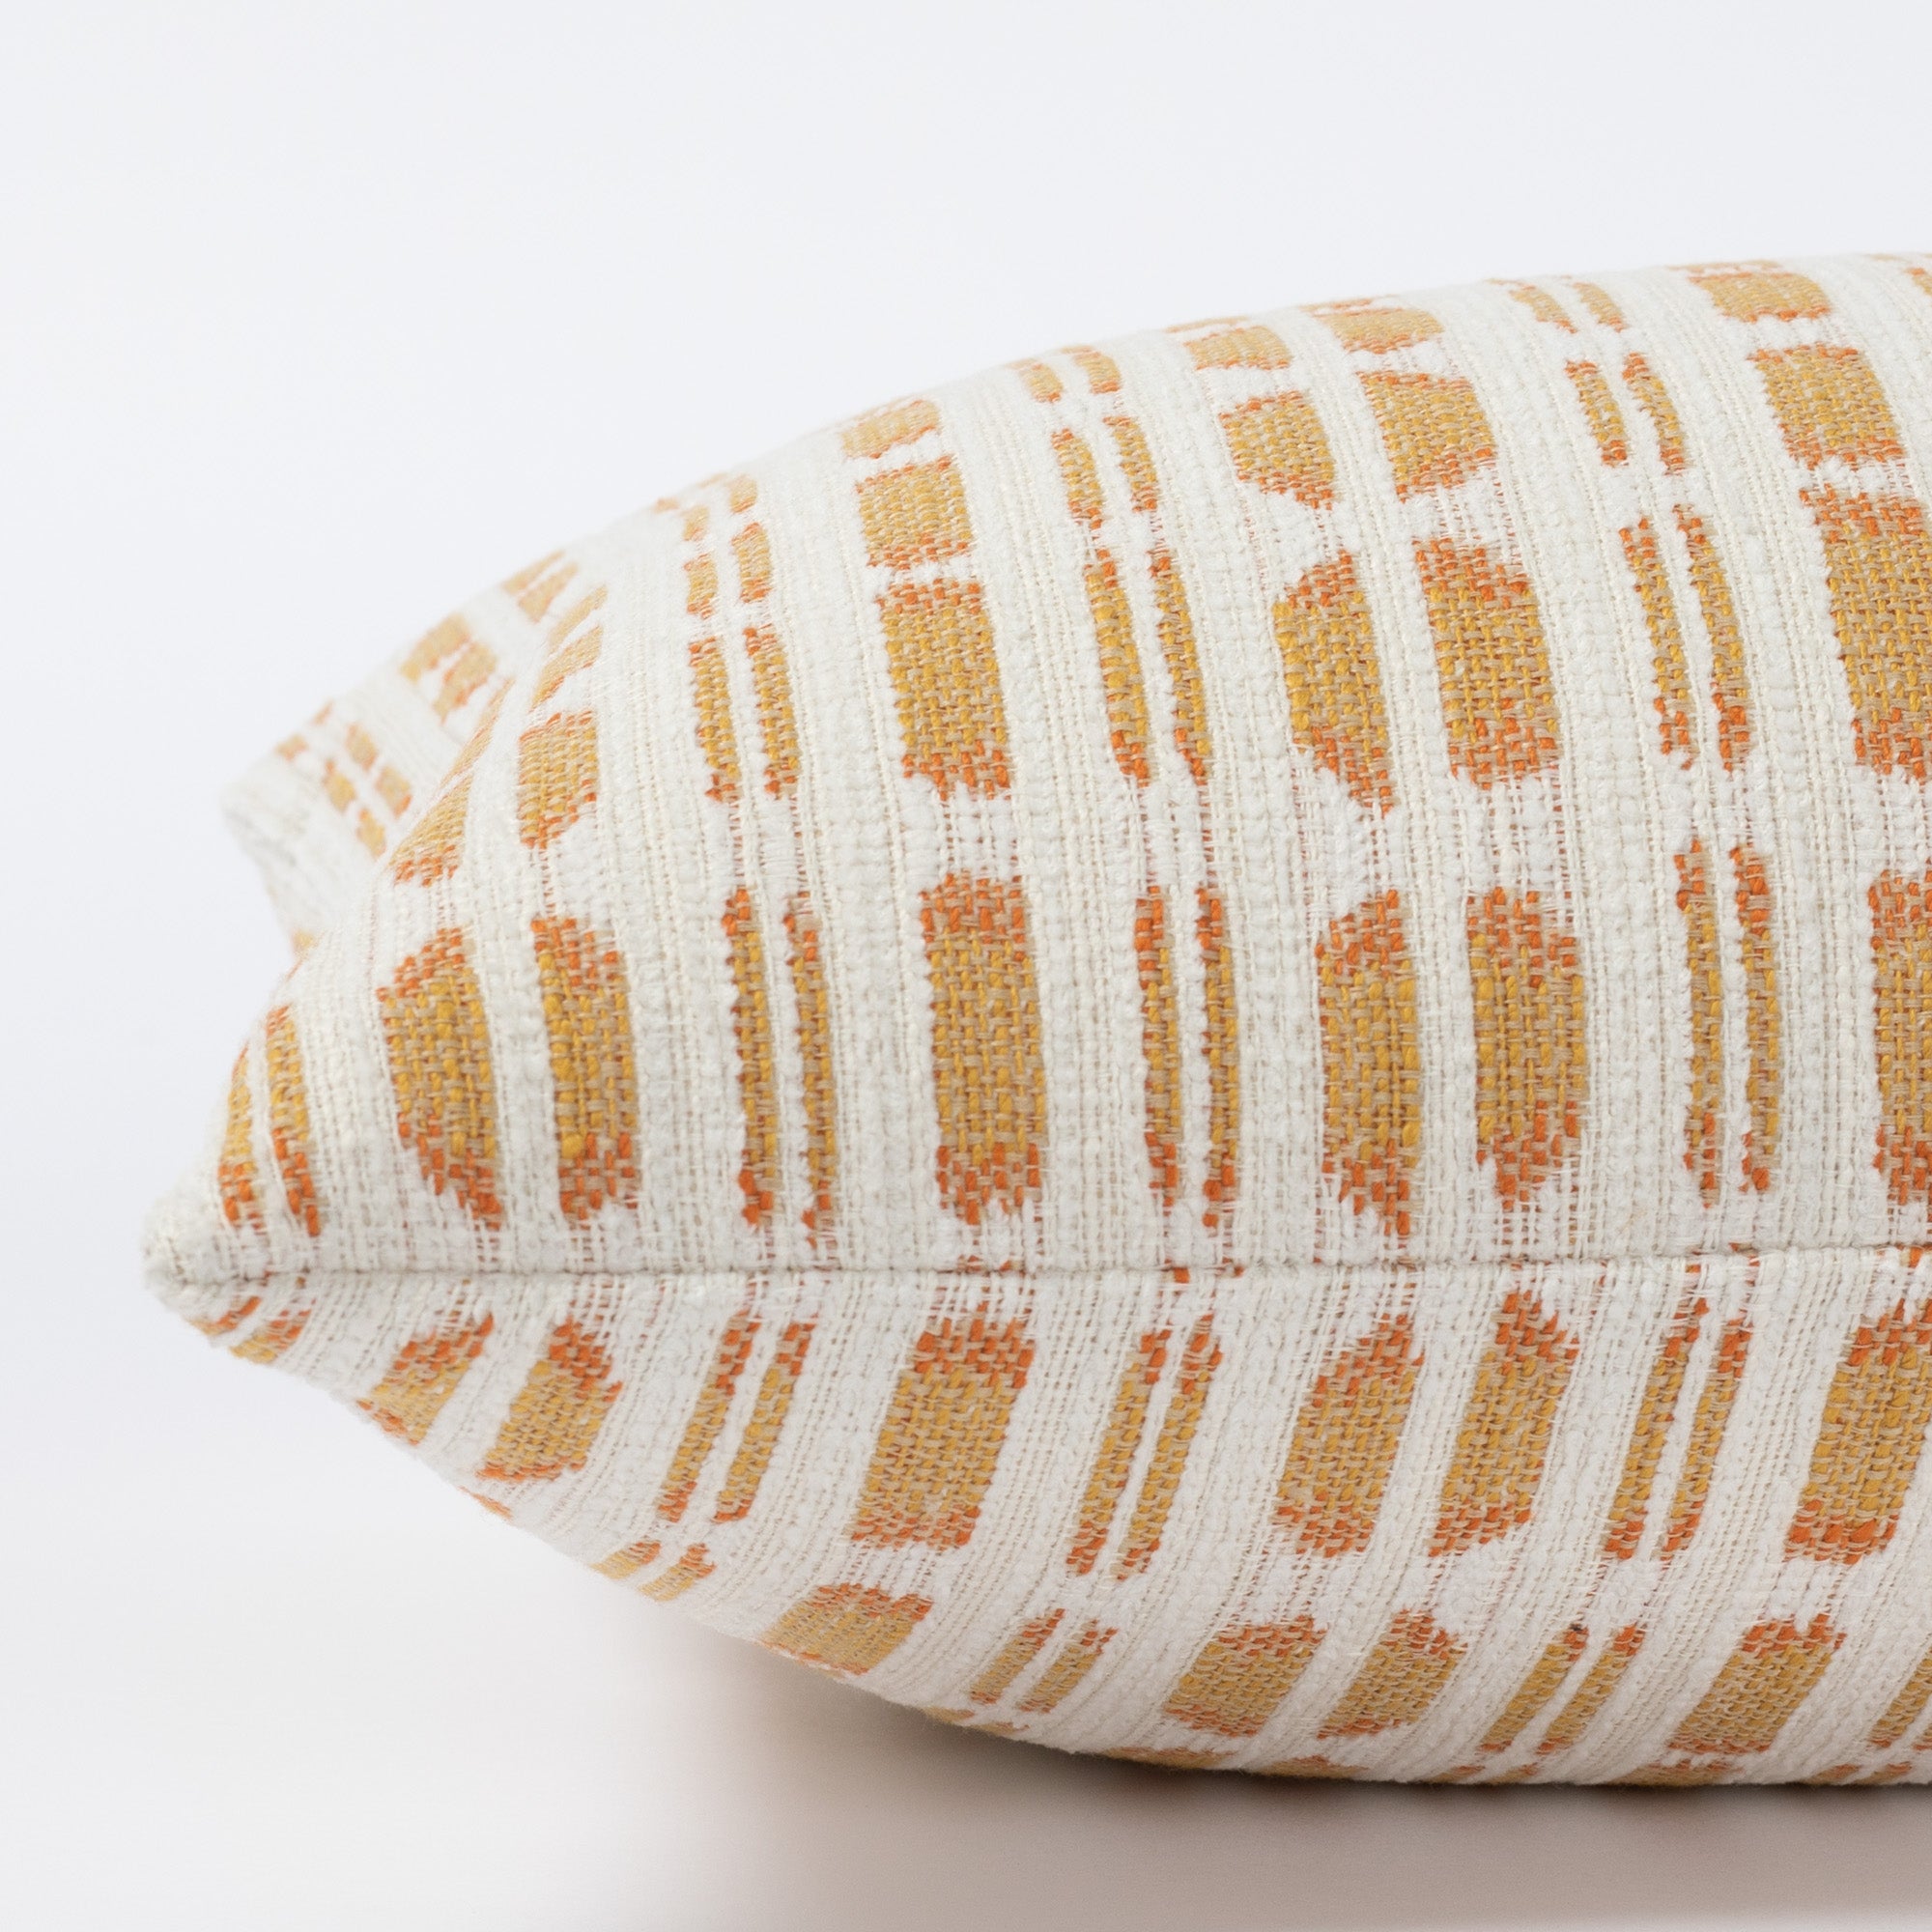 Calima Sunglow yellow, tangerine and white ikat patterned lumbar pillow : view 4